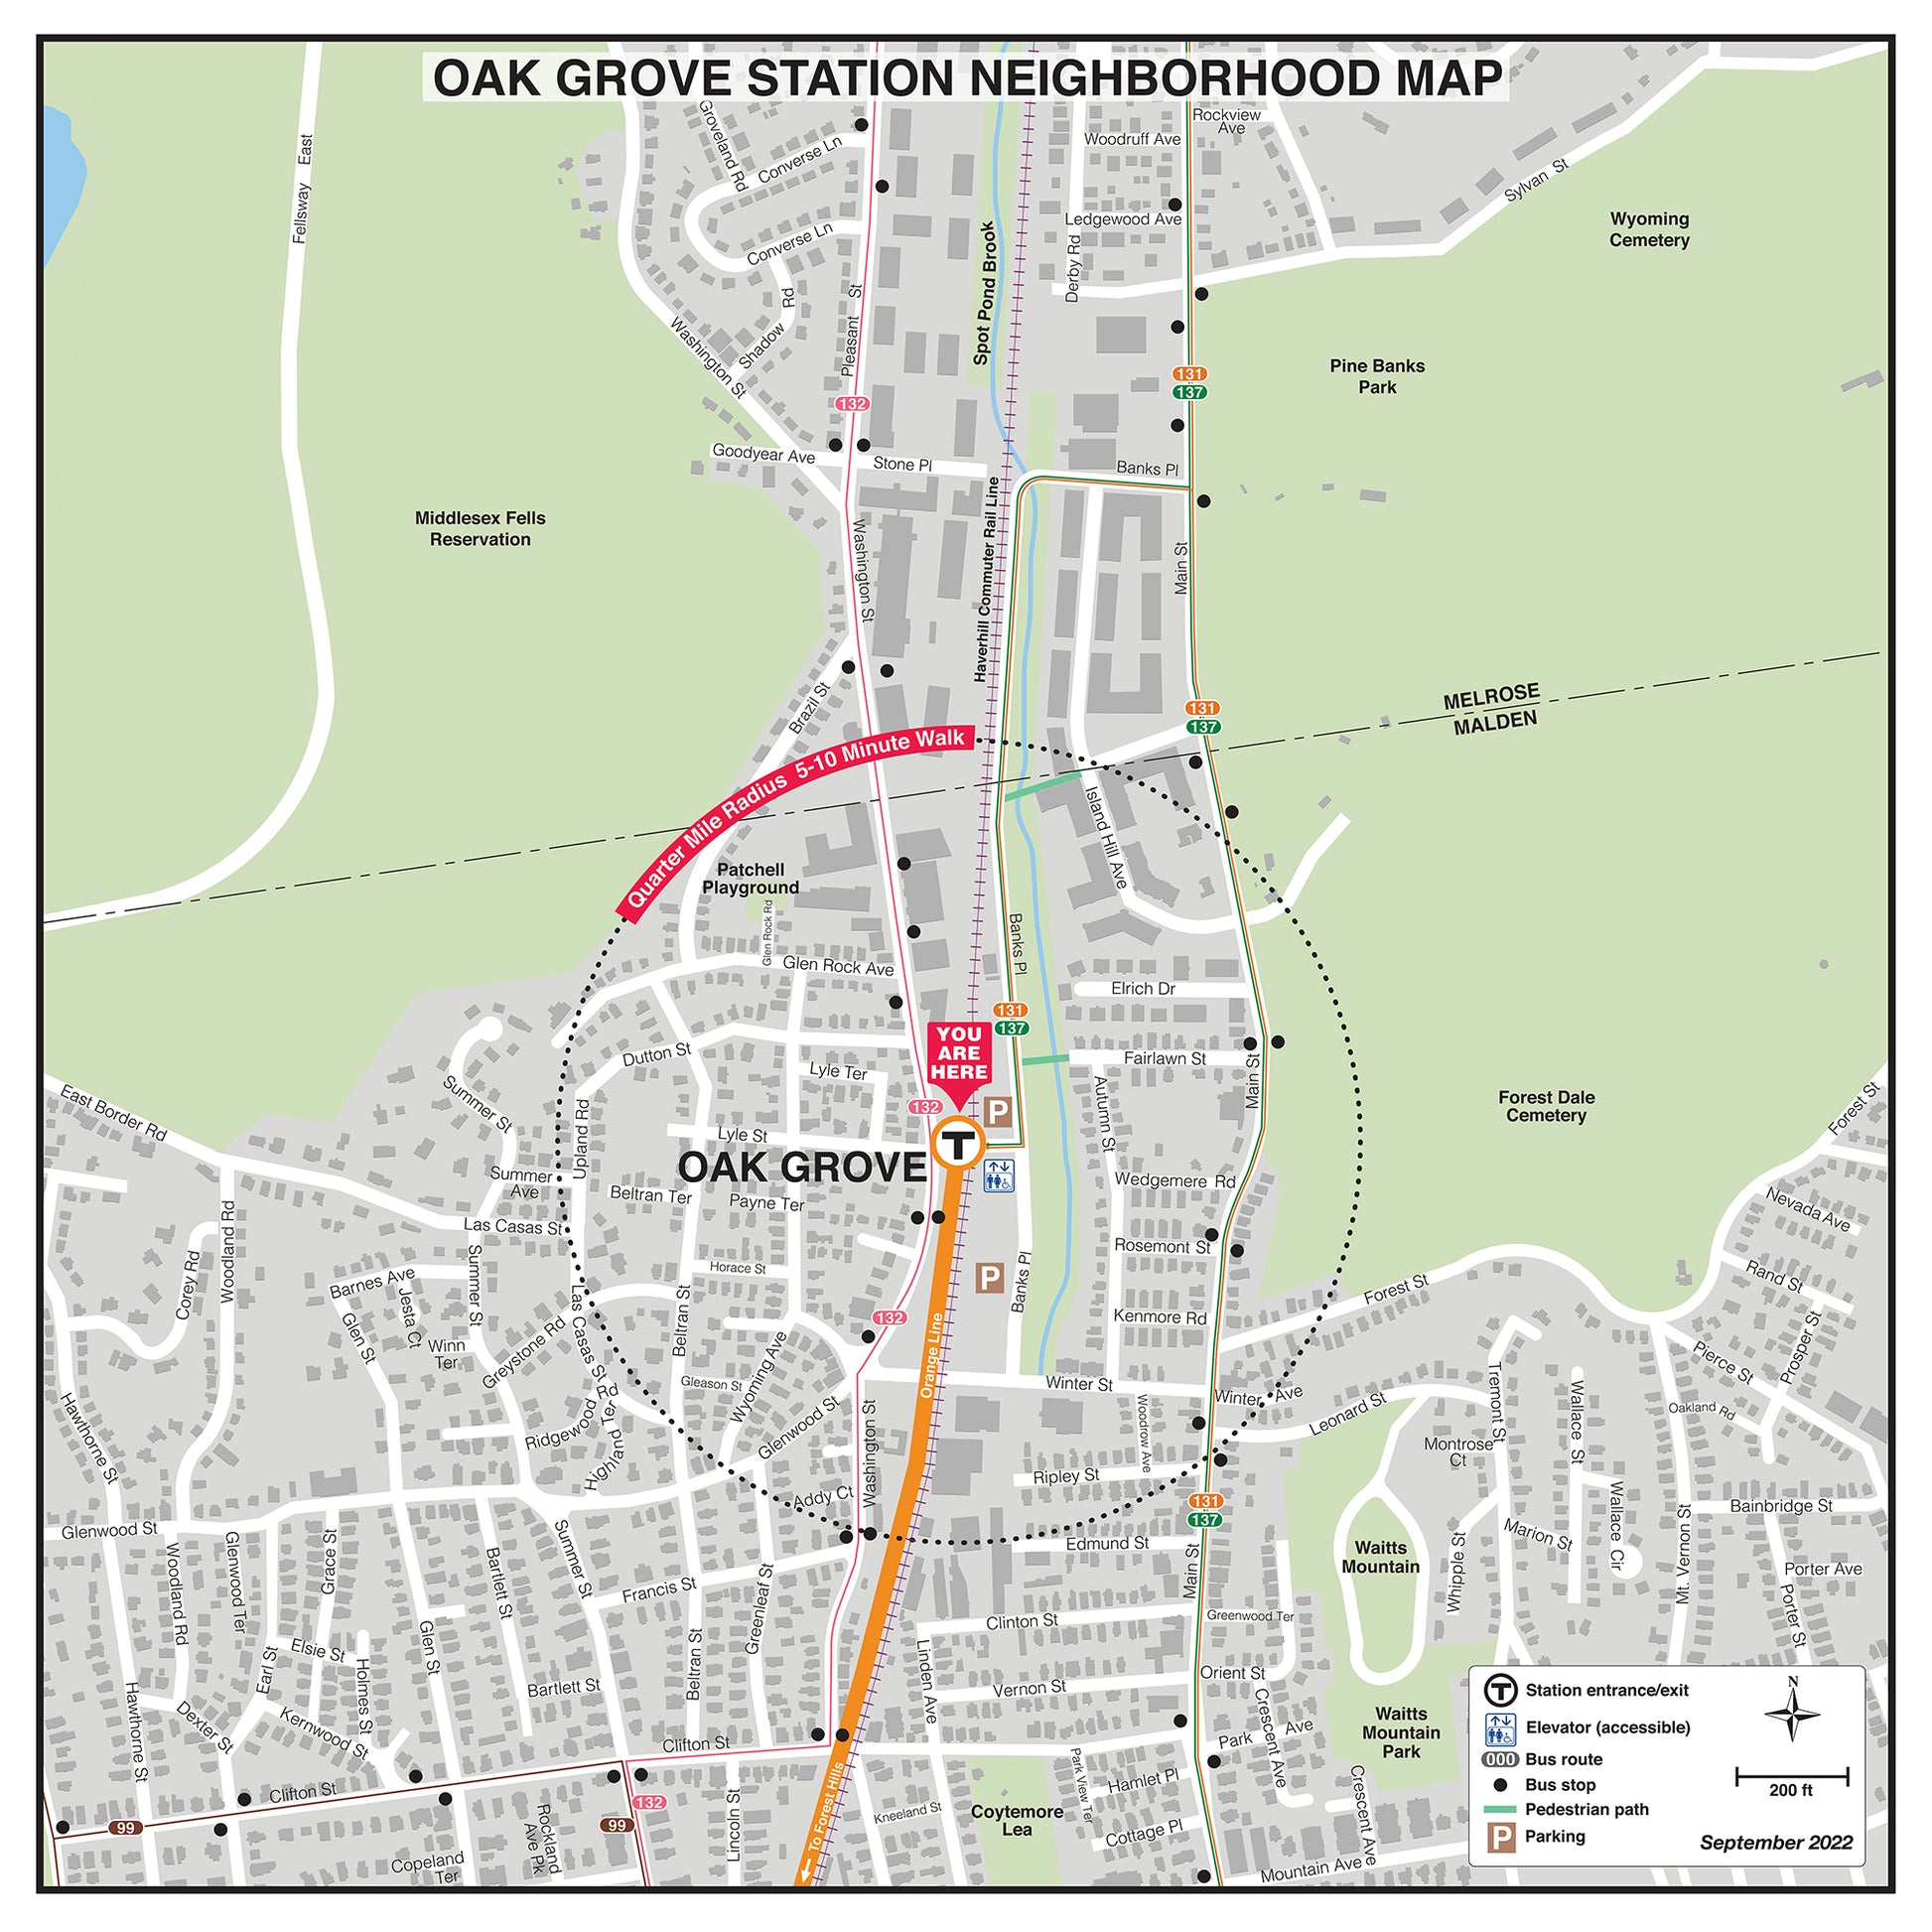 Orange Line Station Neighborhood Map: Oak Grove (Sept. 2022)